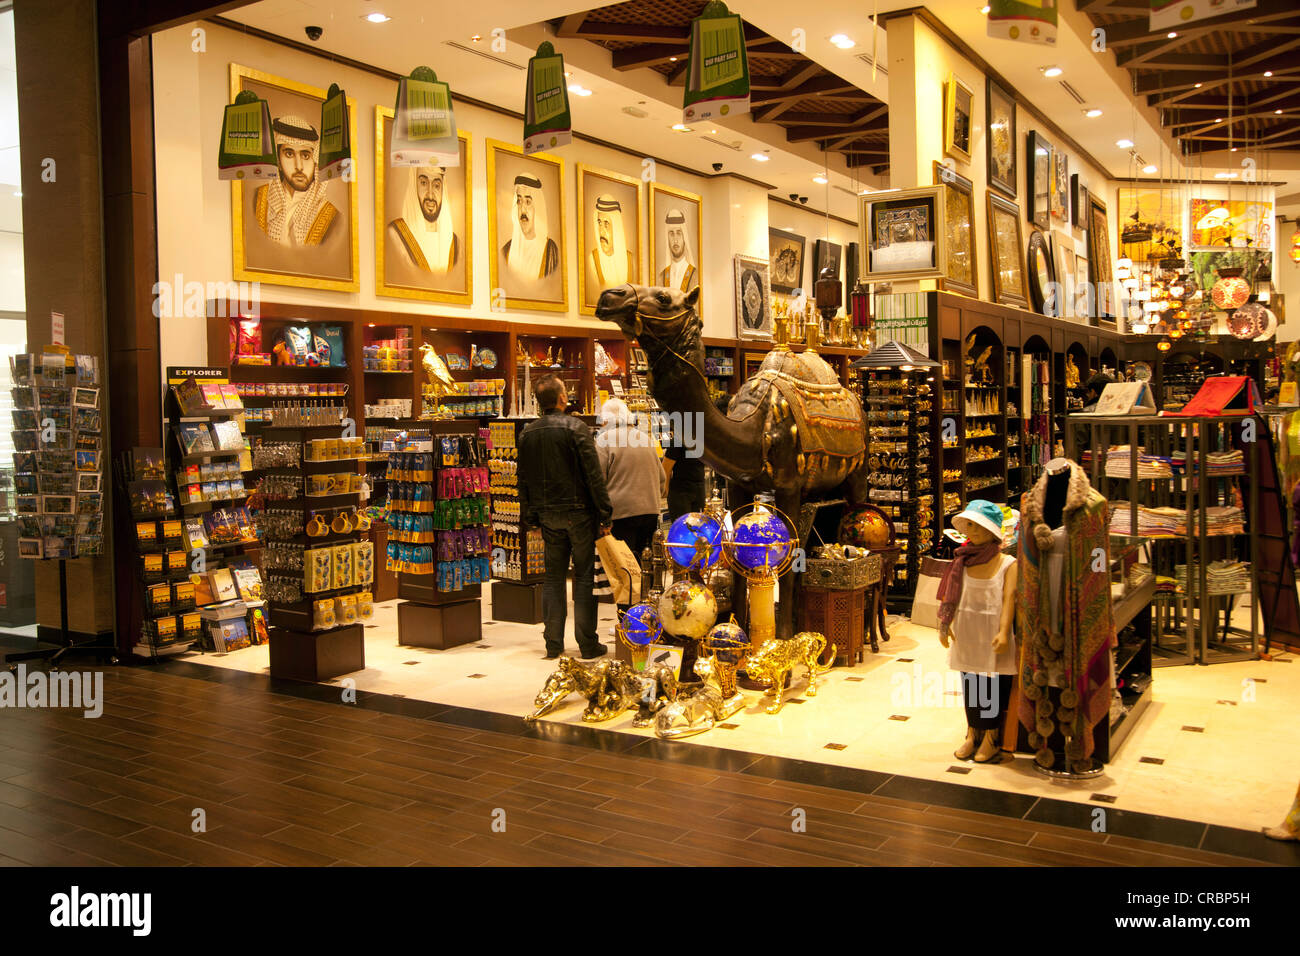 Tienda de regalos en el centro comercial Dubai Mall, Dubai, Emiratos Árabes Unidos, Oriente Medio, Asia Foto de stock